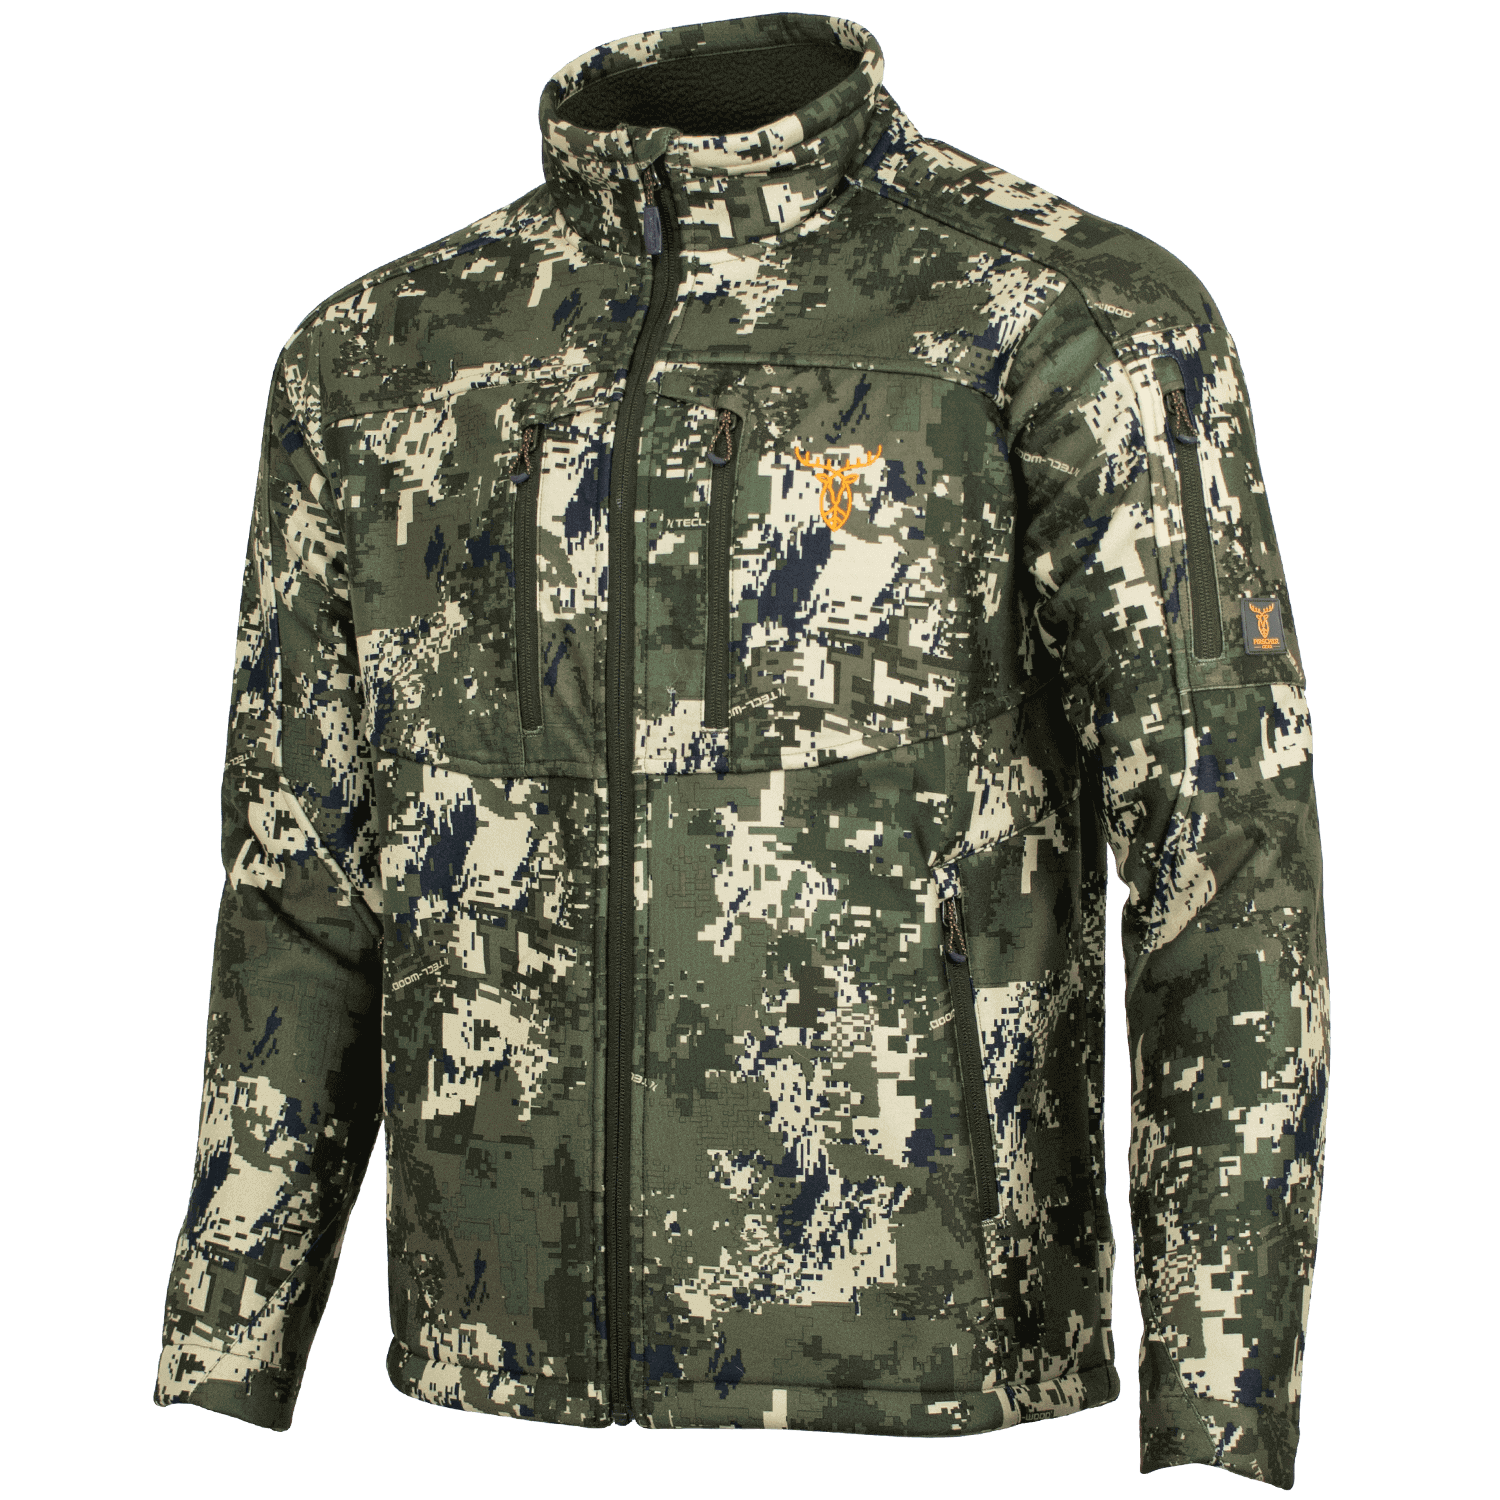 Pirscher Gear Silence Pro Jacket (Optimax) - Camouflage Clothing